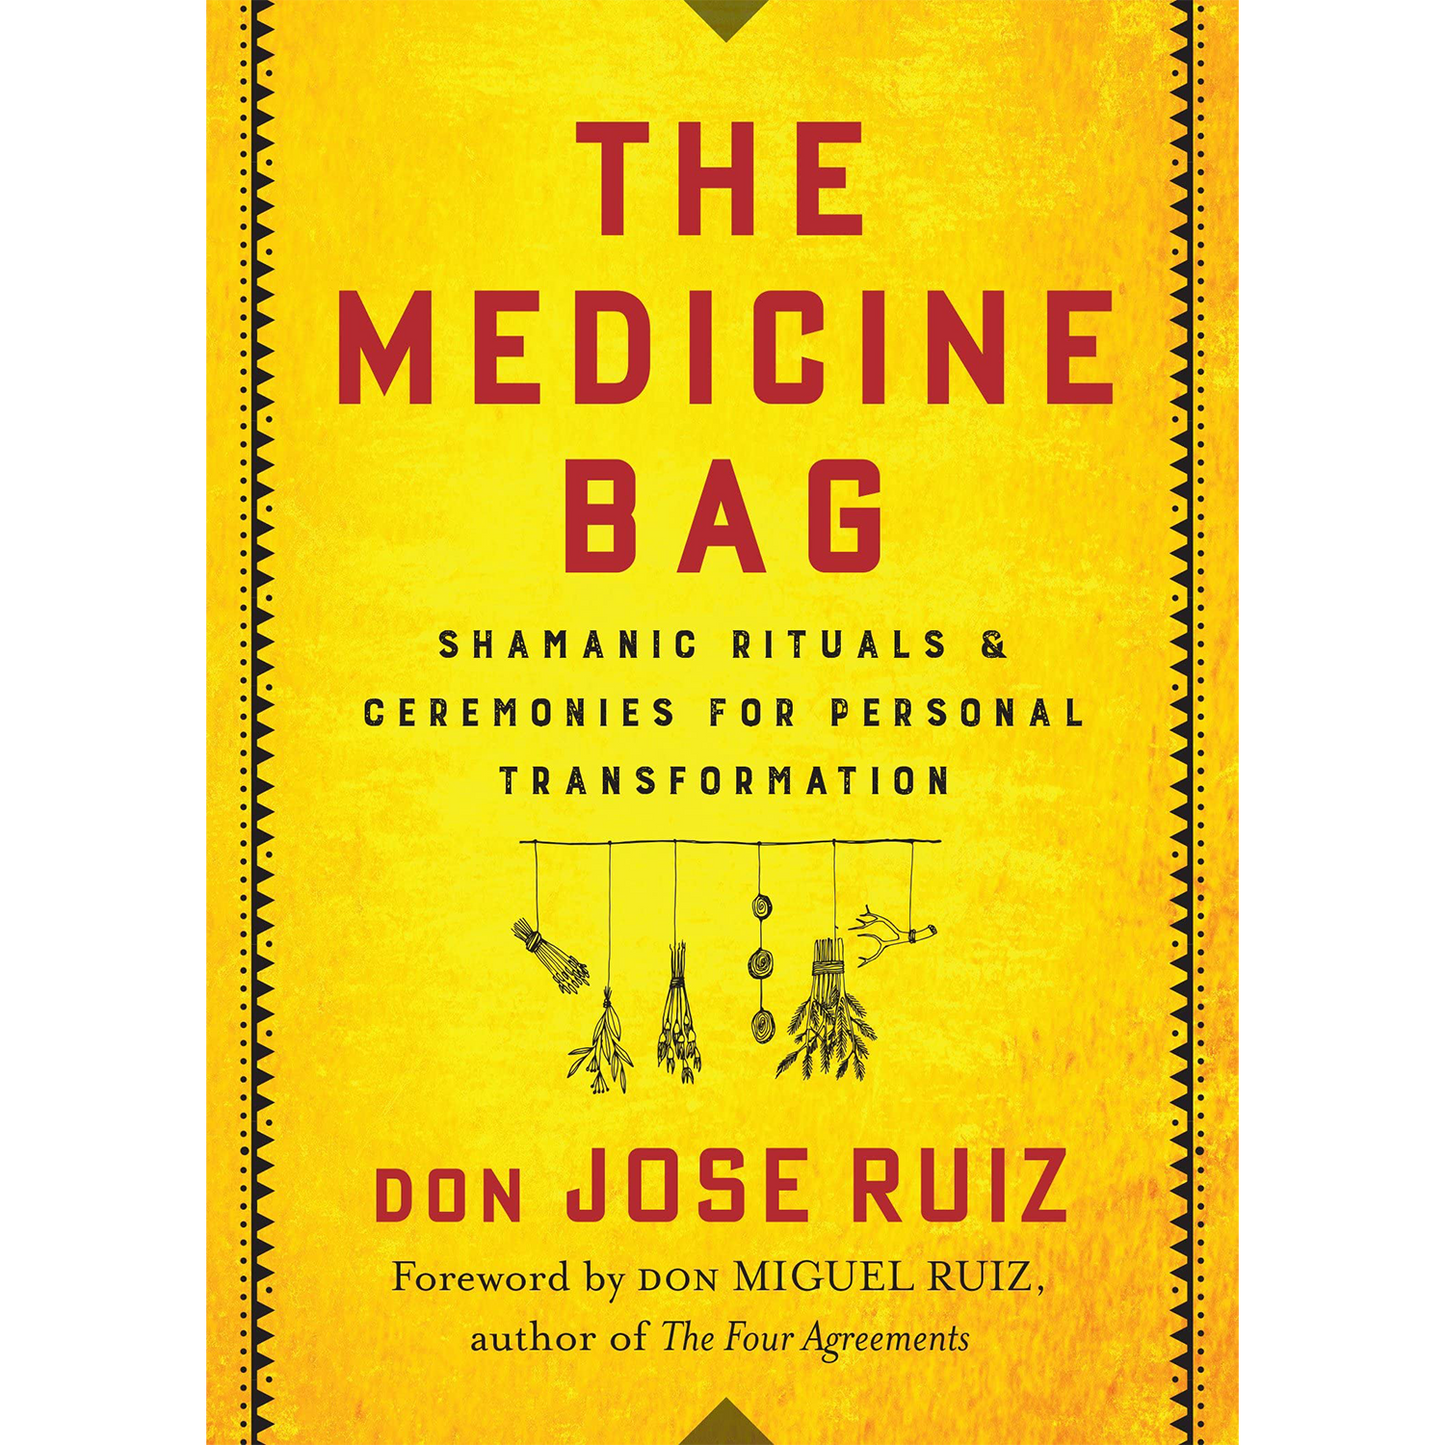 The Medicine Bag: Shamanic Rituals & Ceremonies for Personal Transformation (Shamanic Wisdom Series) | Paperback